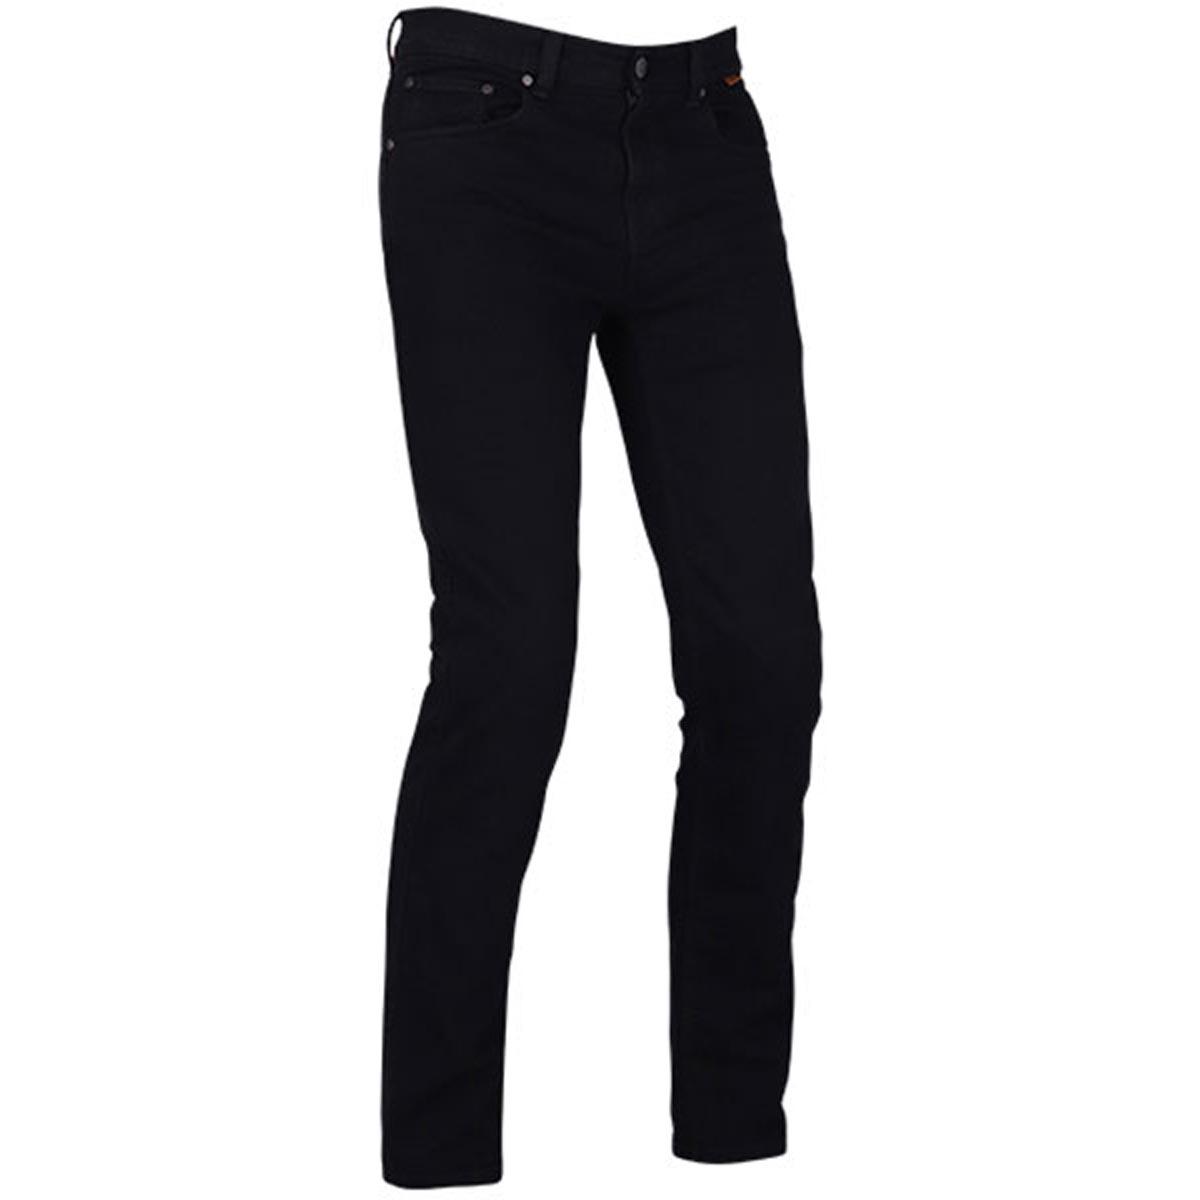 Richa Original 2 Slim Cut Jeans Black 32in Leg 44in Waist